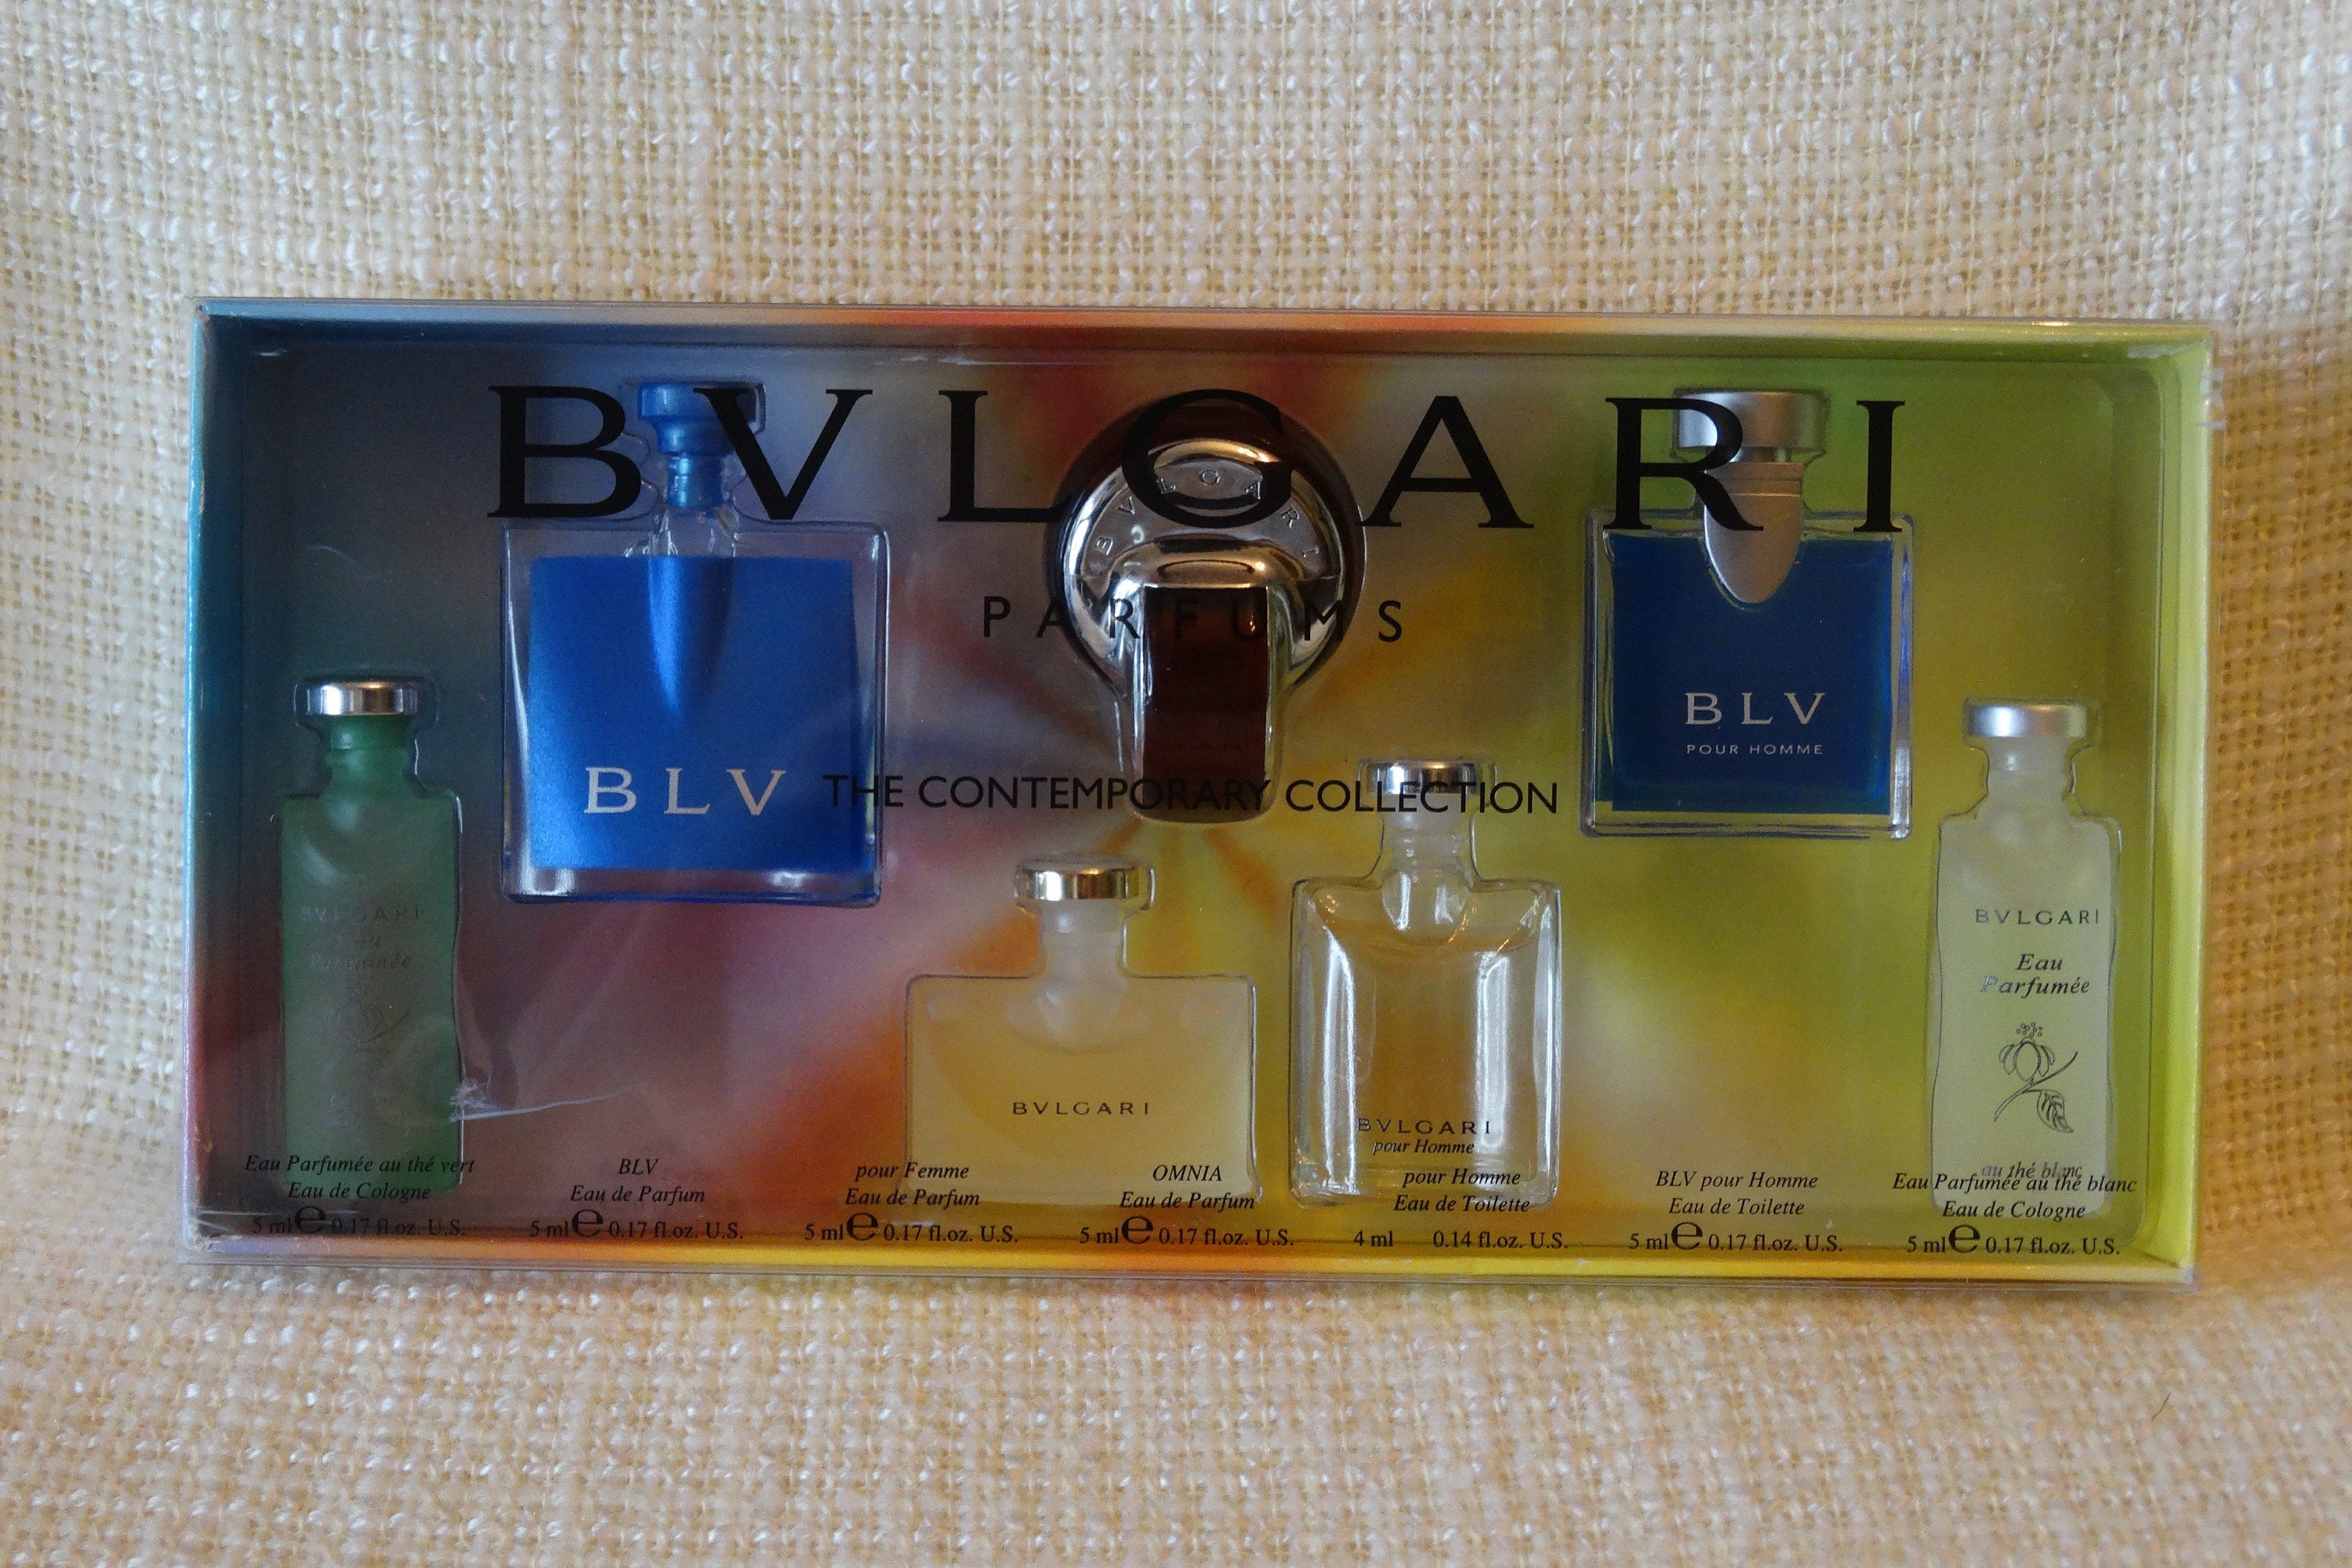 Bvlgari Eau Parfumee au The Rouge By Bvlgari For Women Mini EDC Perfume Spl  0.17